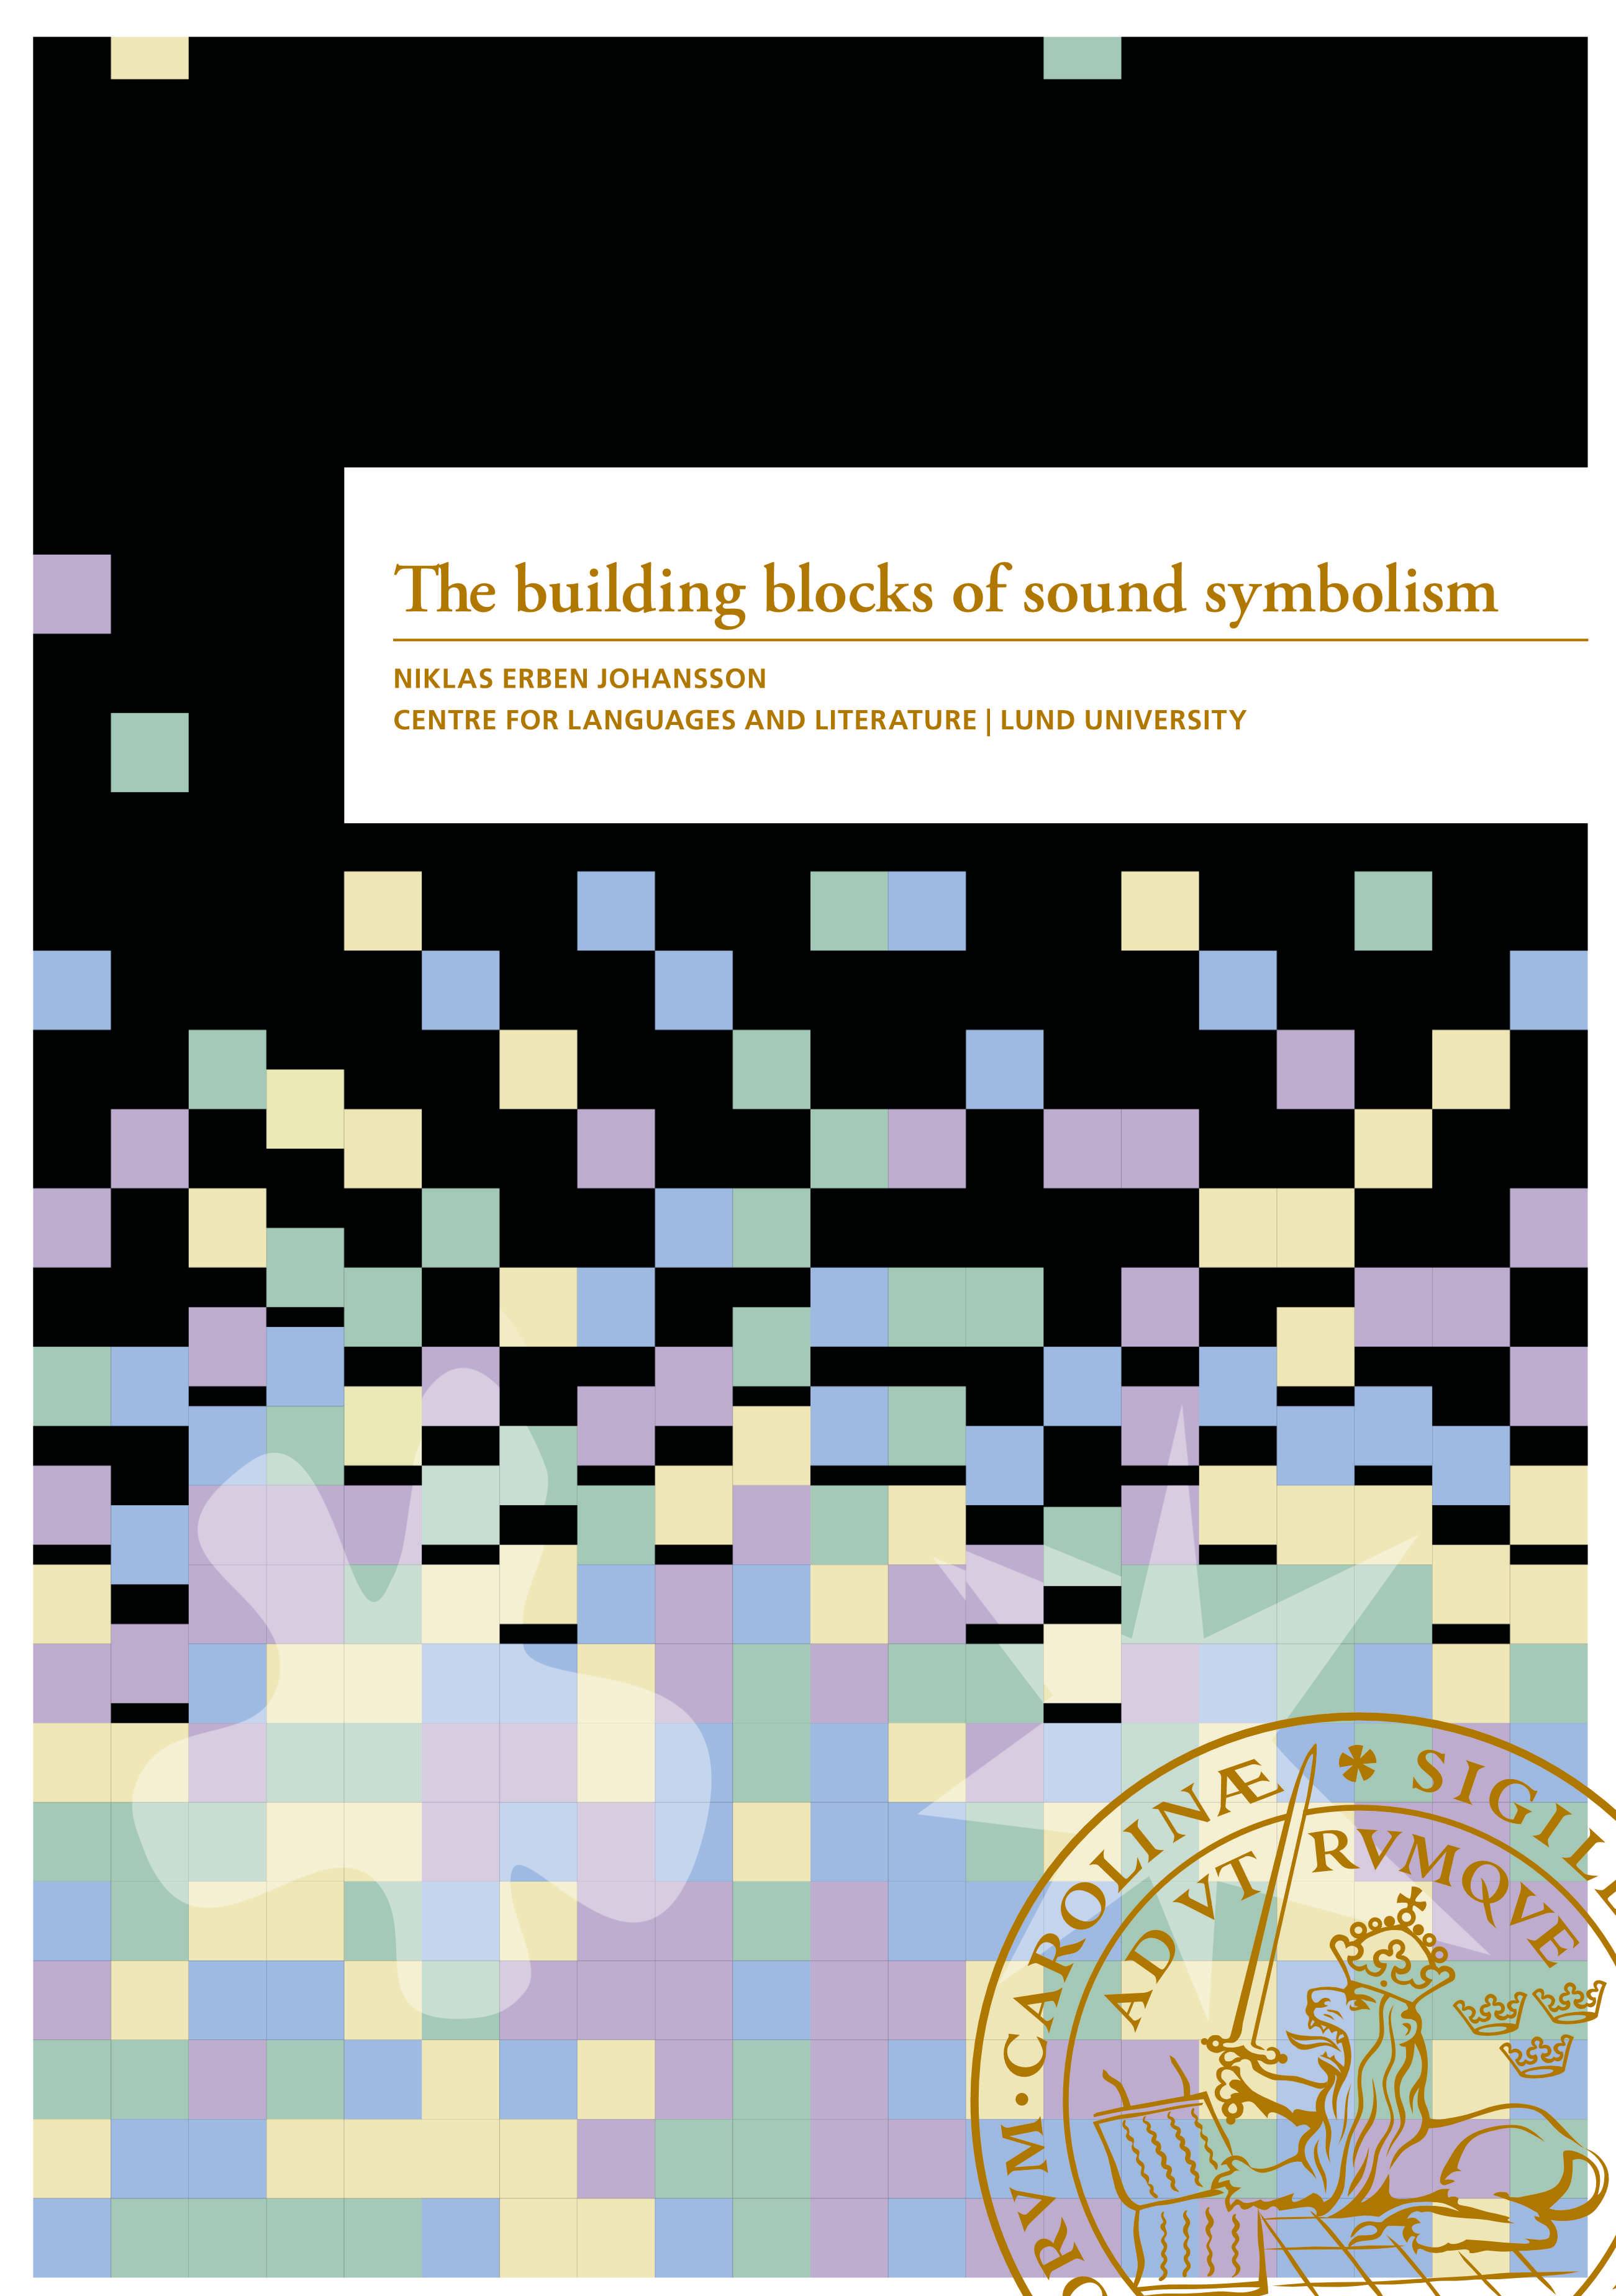 The building blocks of sound symbolism